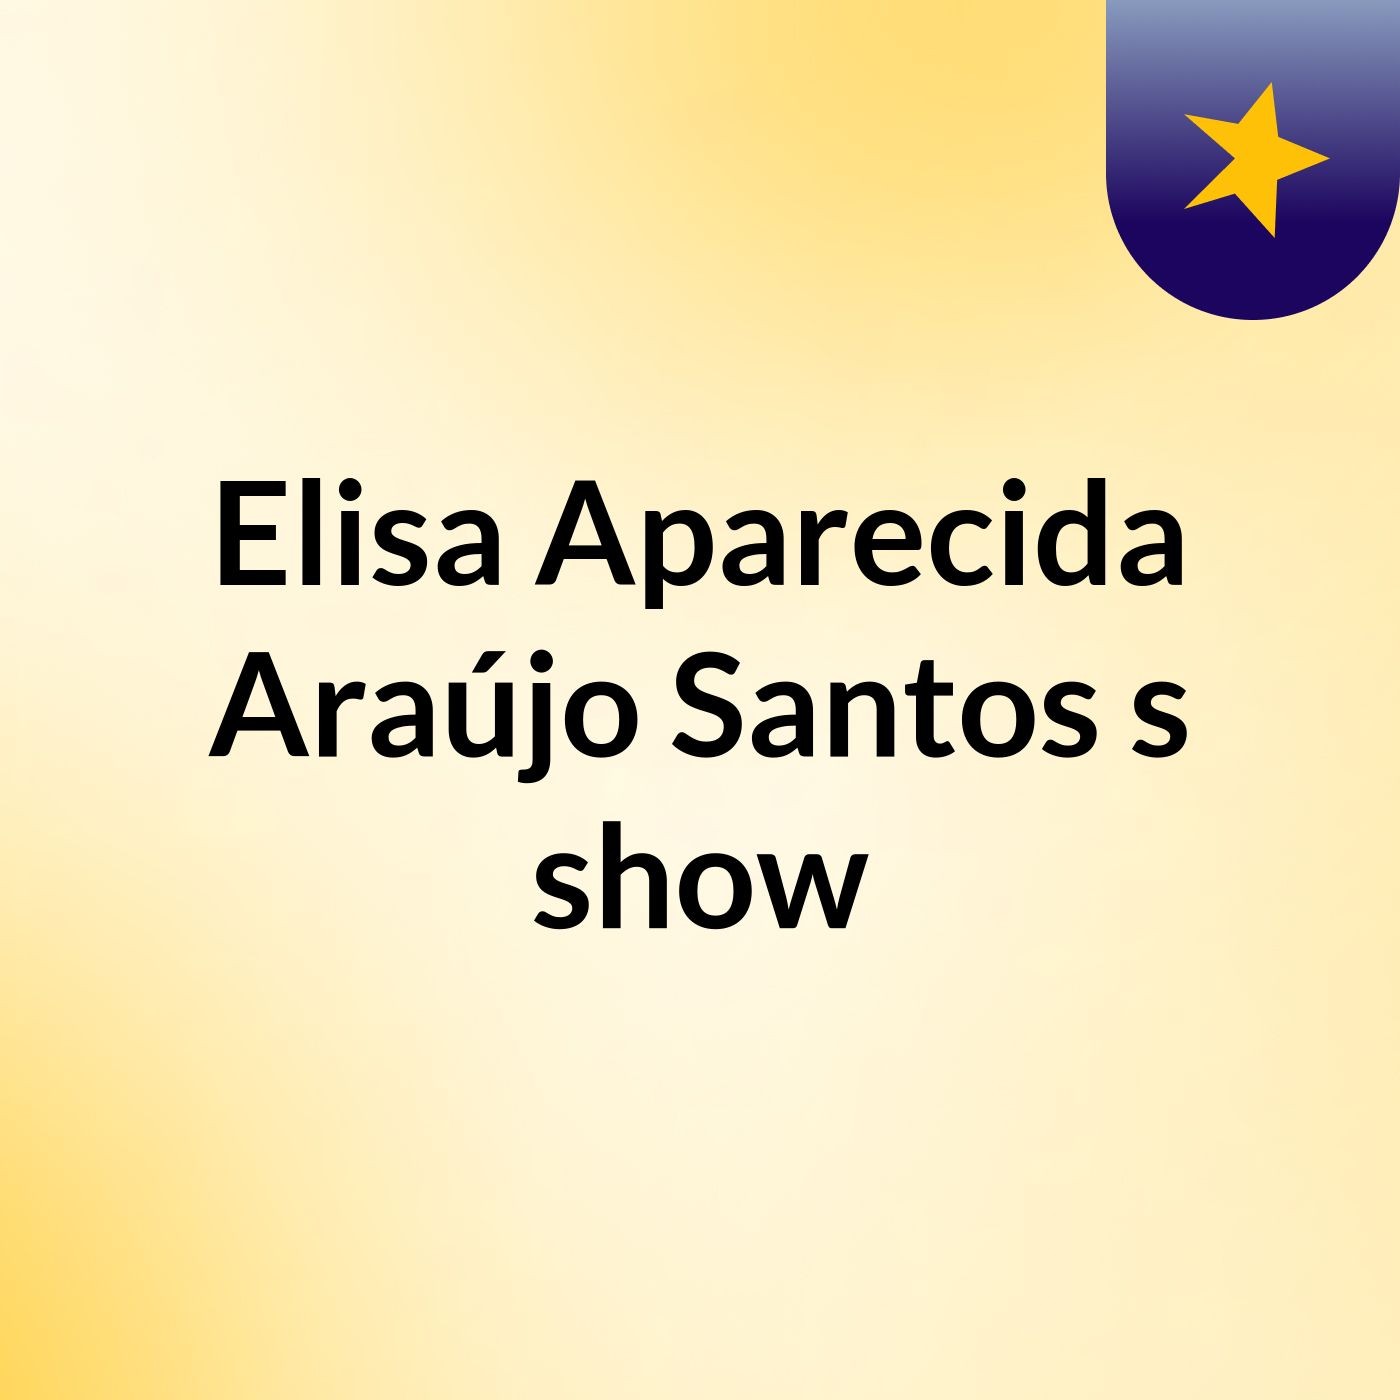 Elisa Aparecida Araújo Santos's show